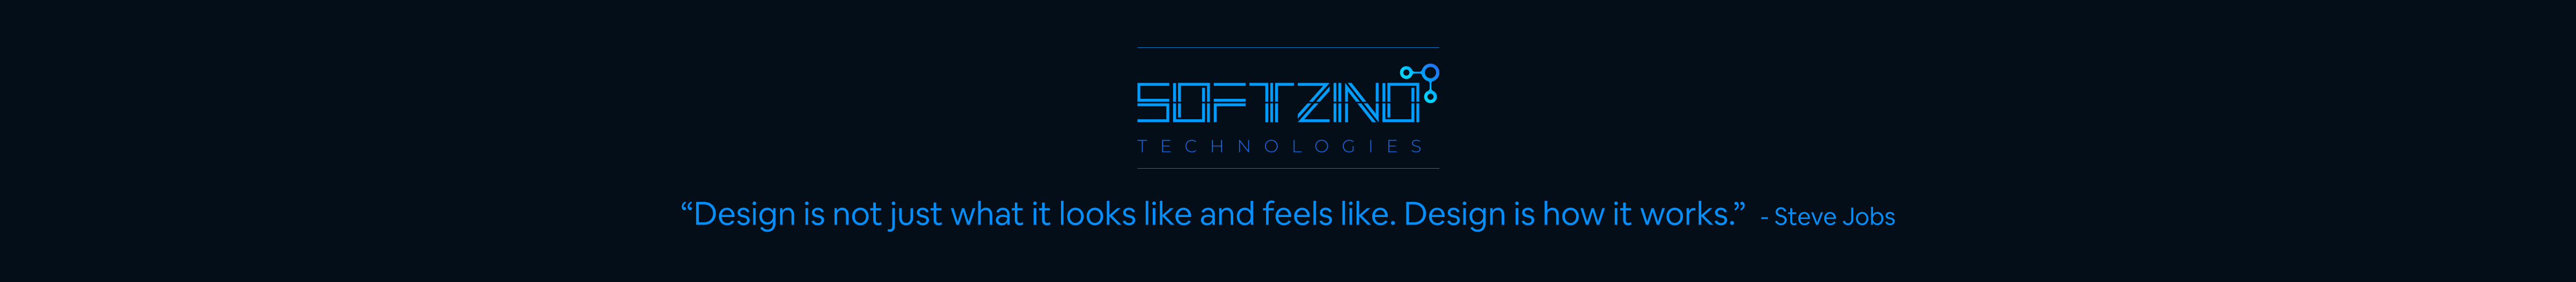 Softzino Technologies's profile banner